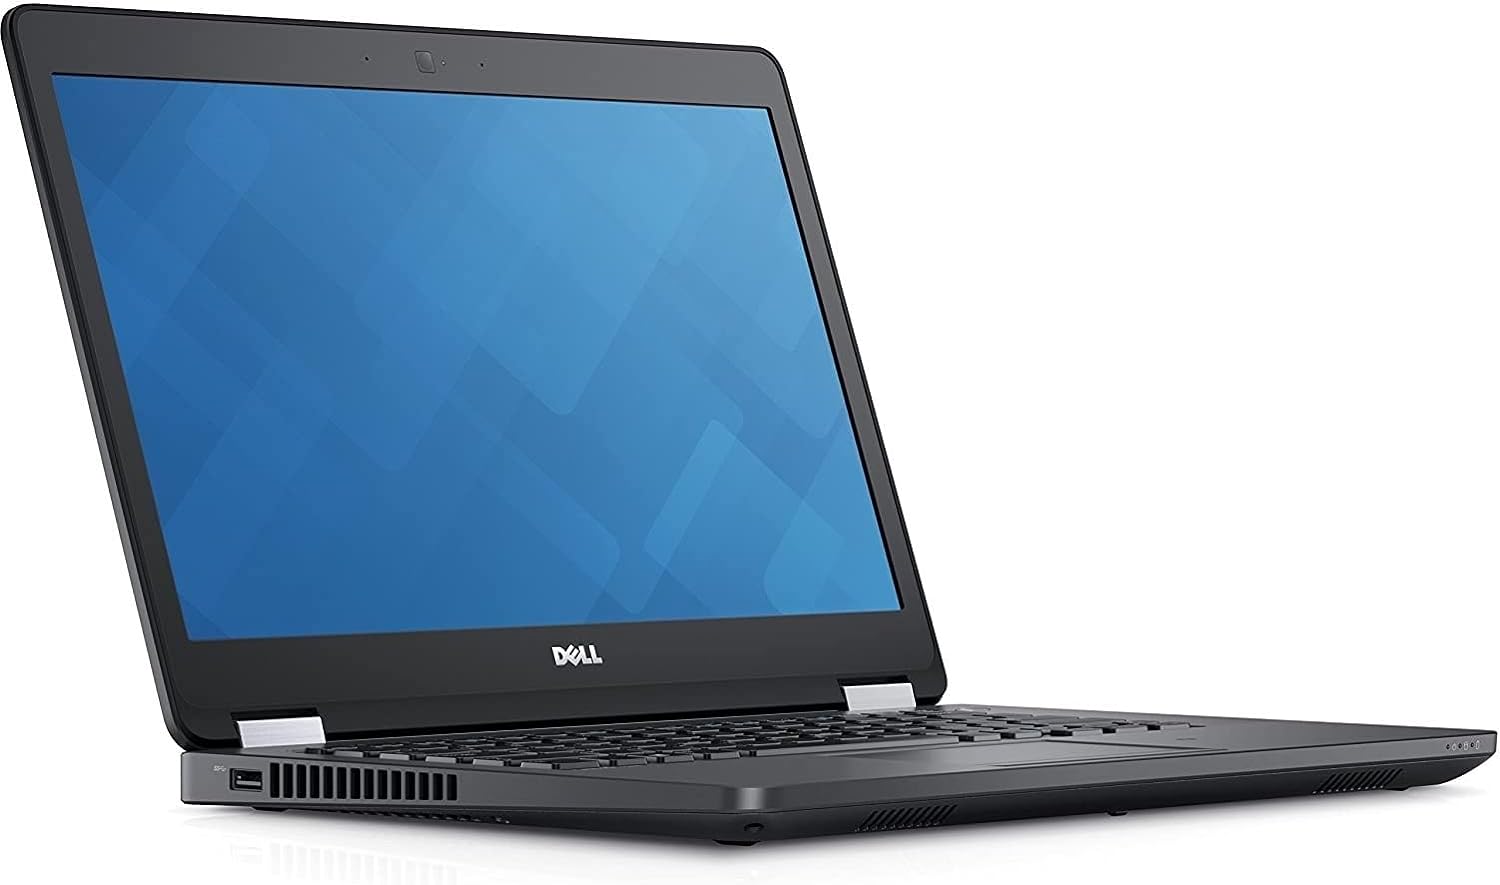 Dell Latitude E5470 HD Business Laptop Notebook PC (Intel Core i5-6300U, 8GB Ram, 256GB Solid State SSD, HDMI, Camera, WiFi, SC Card Reader) Win 10 Pro (Renewed)